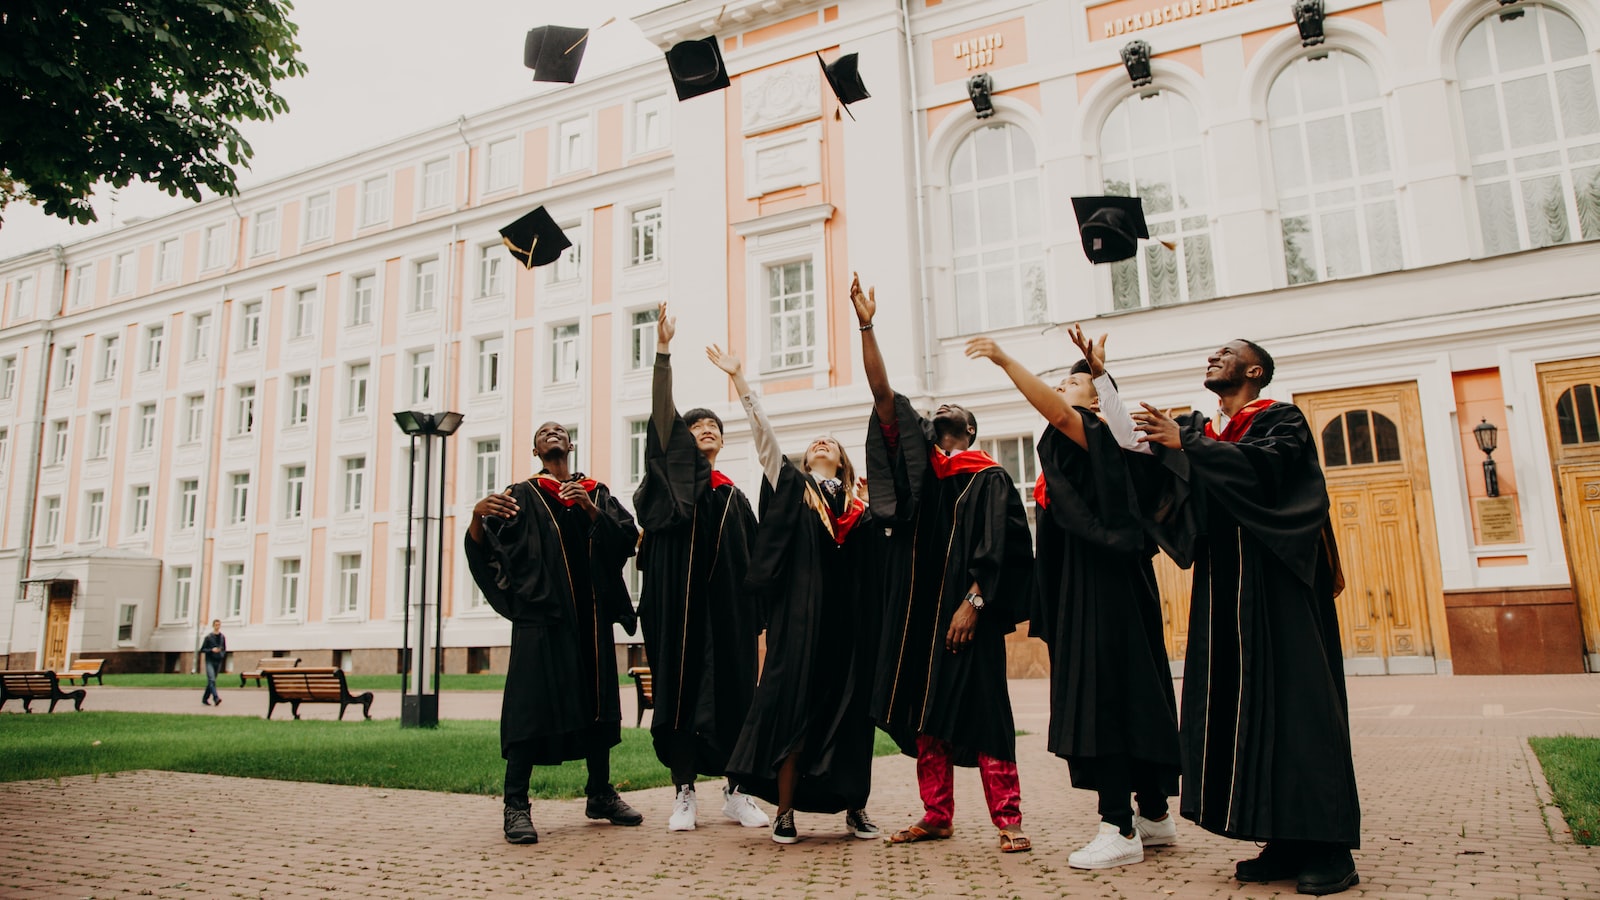 Achieve Bachelor's Degree Online: Explore College Options